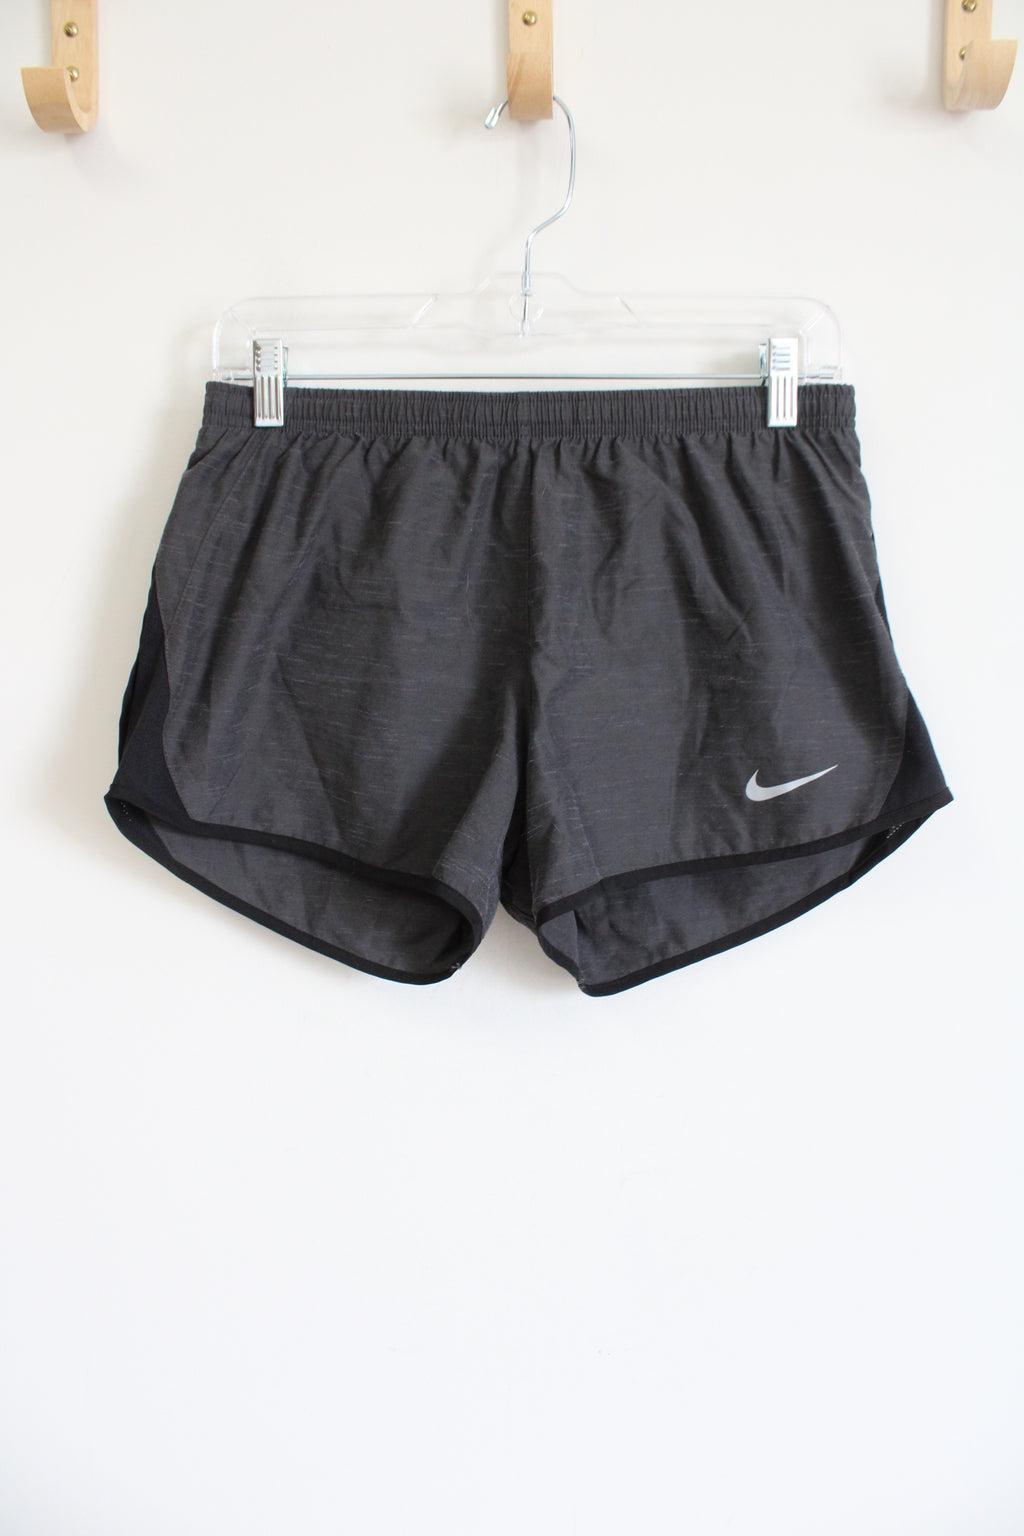 Nike Gray & Black Athletic Shorts | M